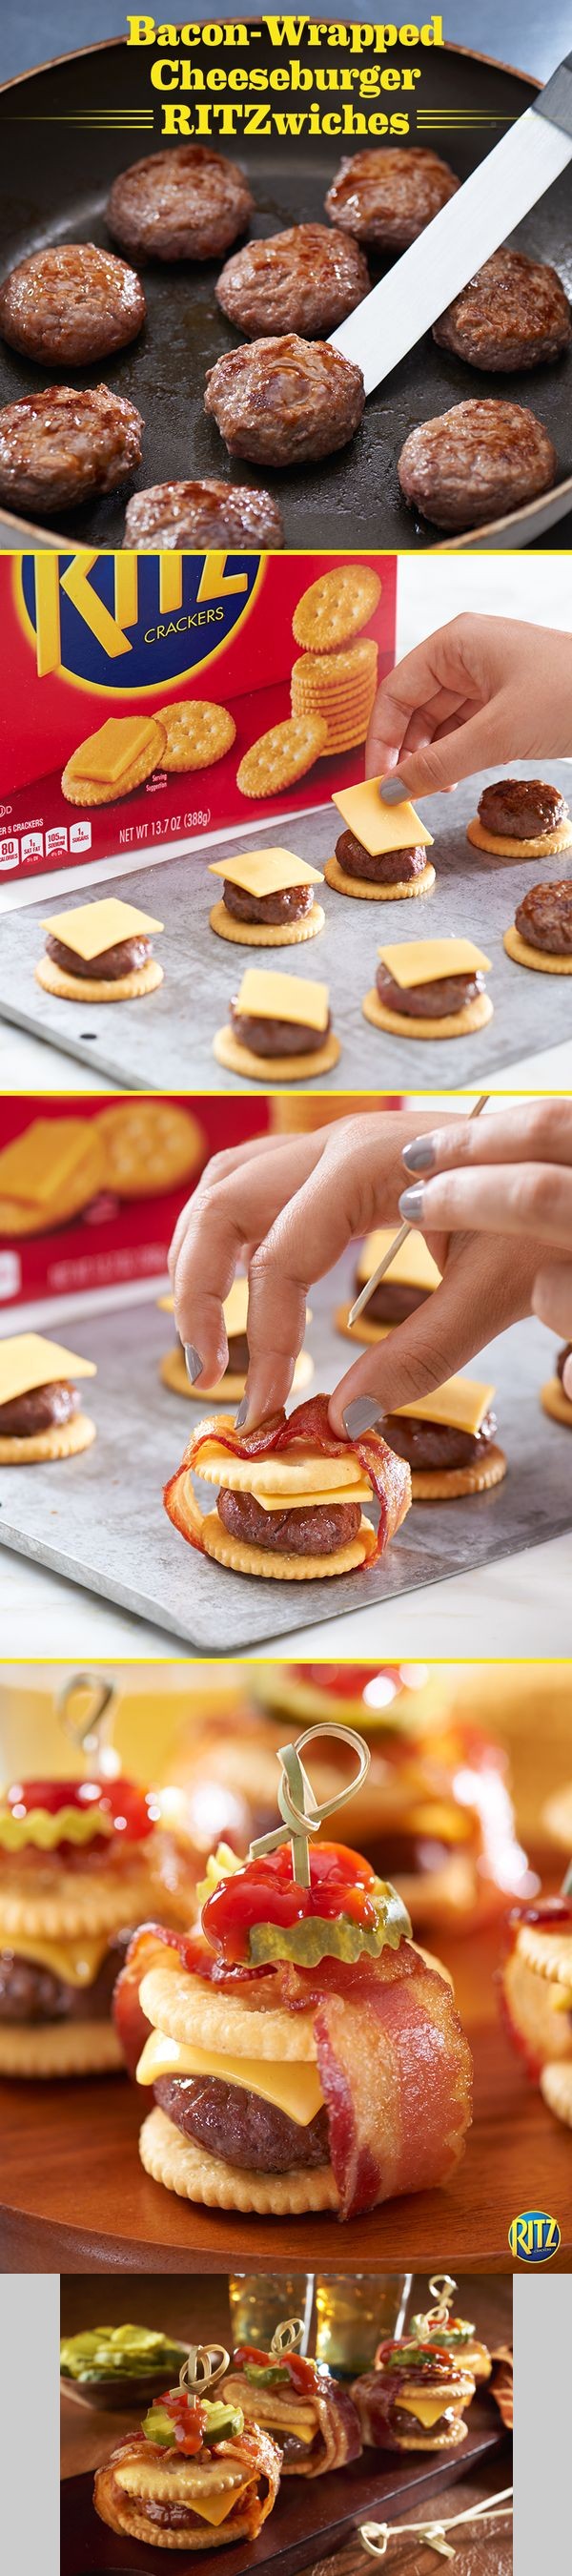 Bacon-Wrapped Cheeseburger RITZwich